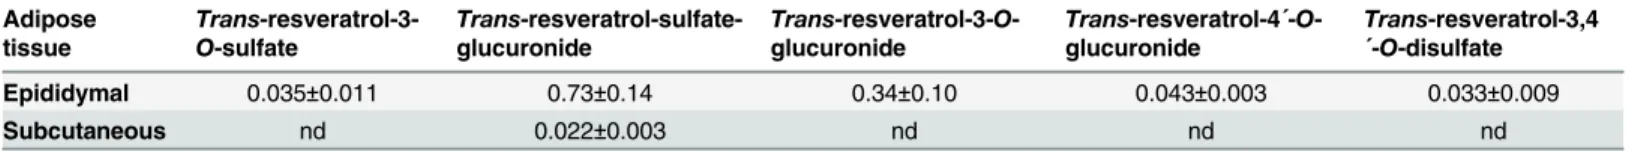 Table 2. Resveratrol metabolites in epididymal and subcutaneous adipose tissues.